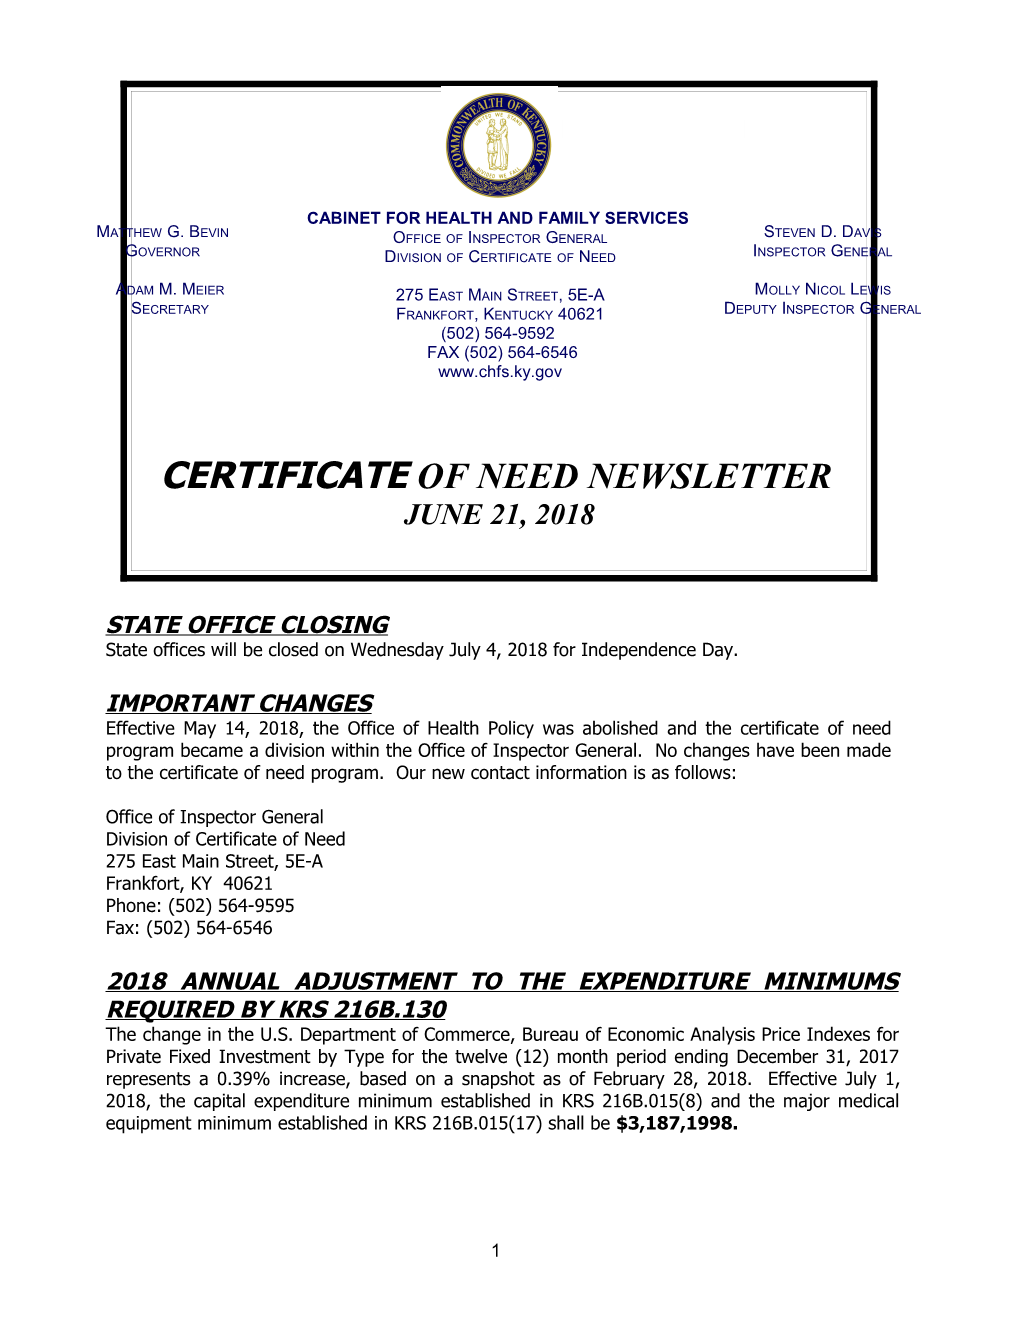 Certificate of Need Newsletter, June 2018